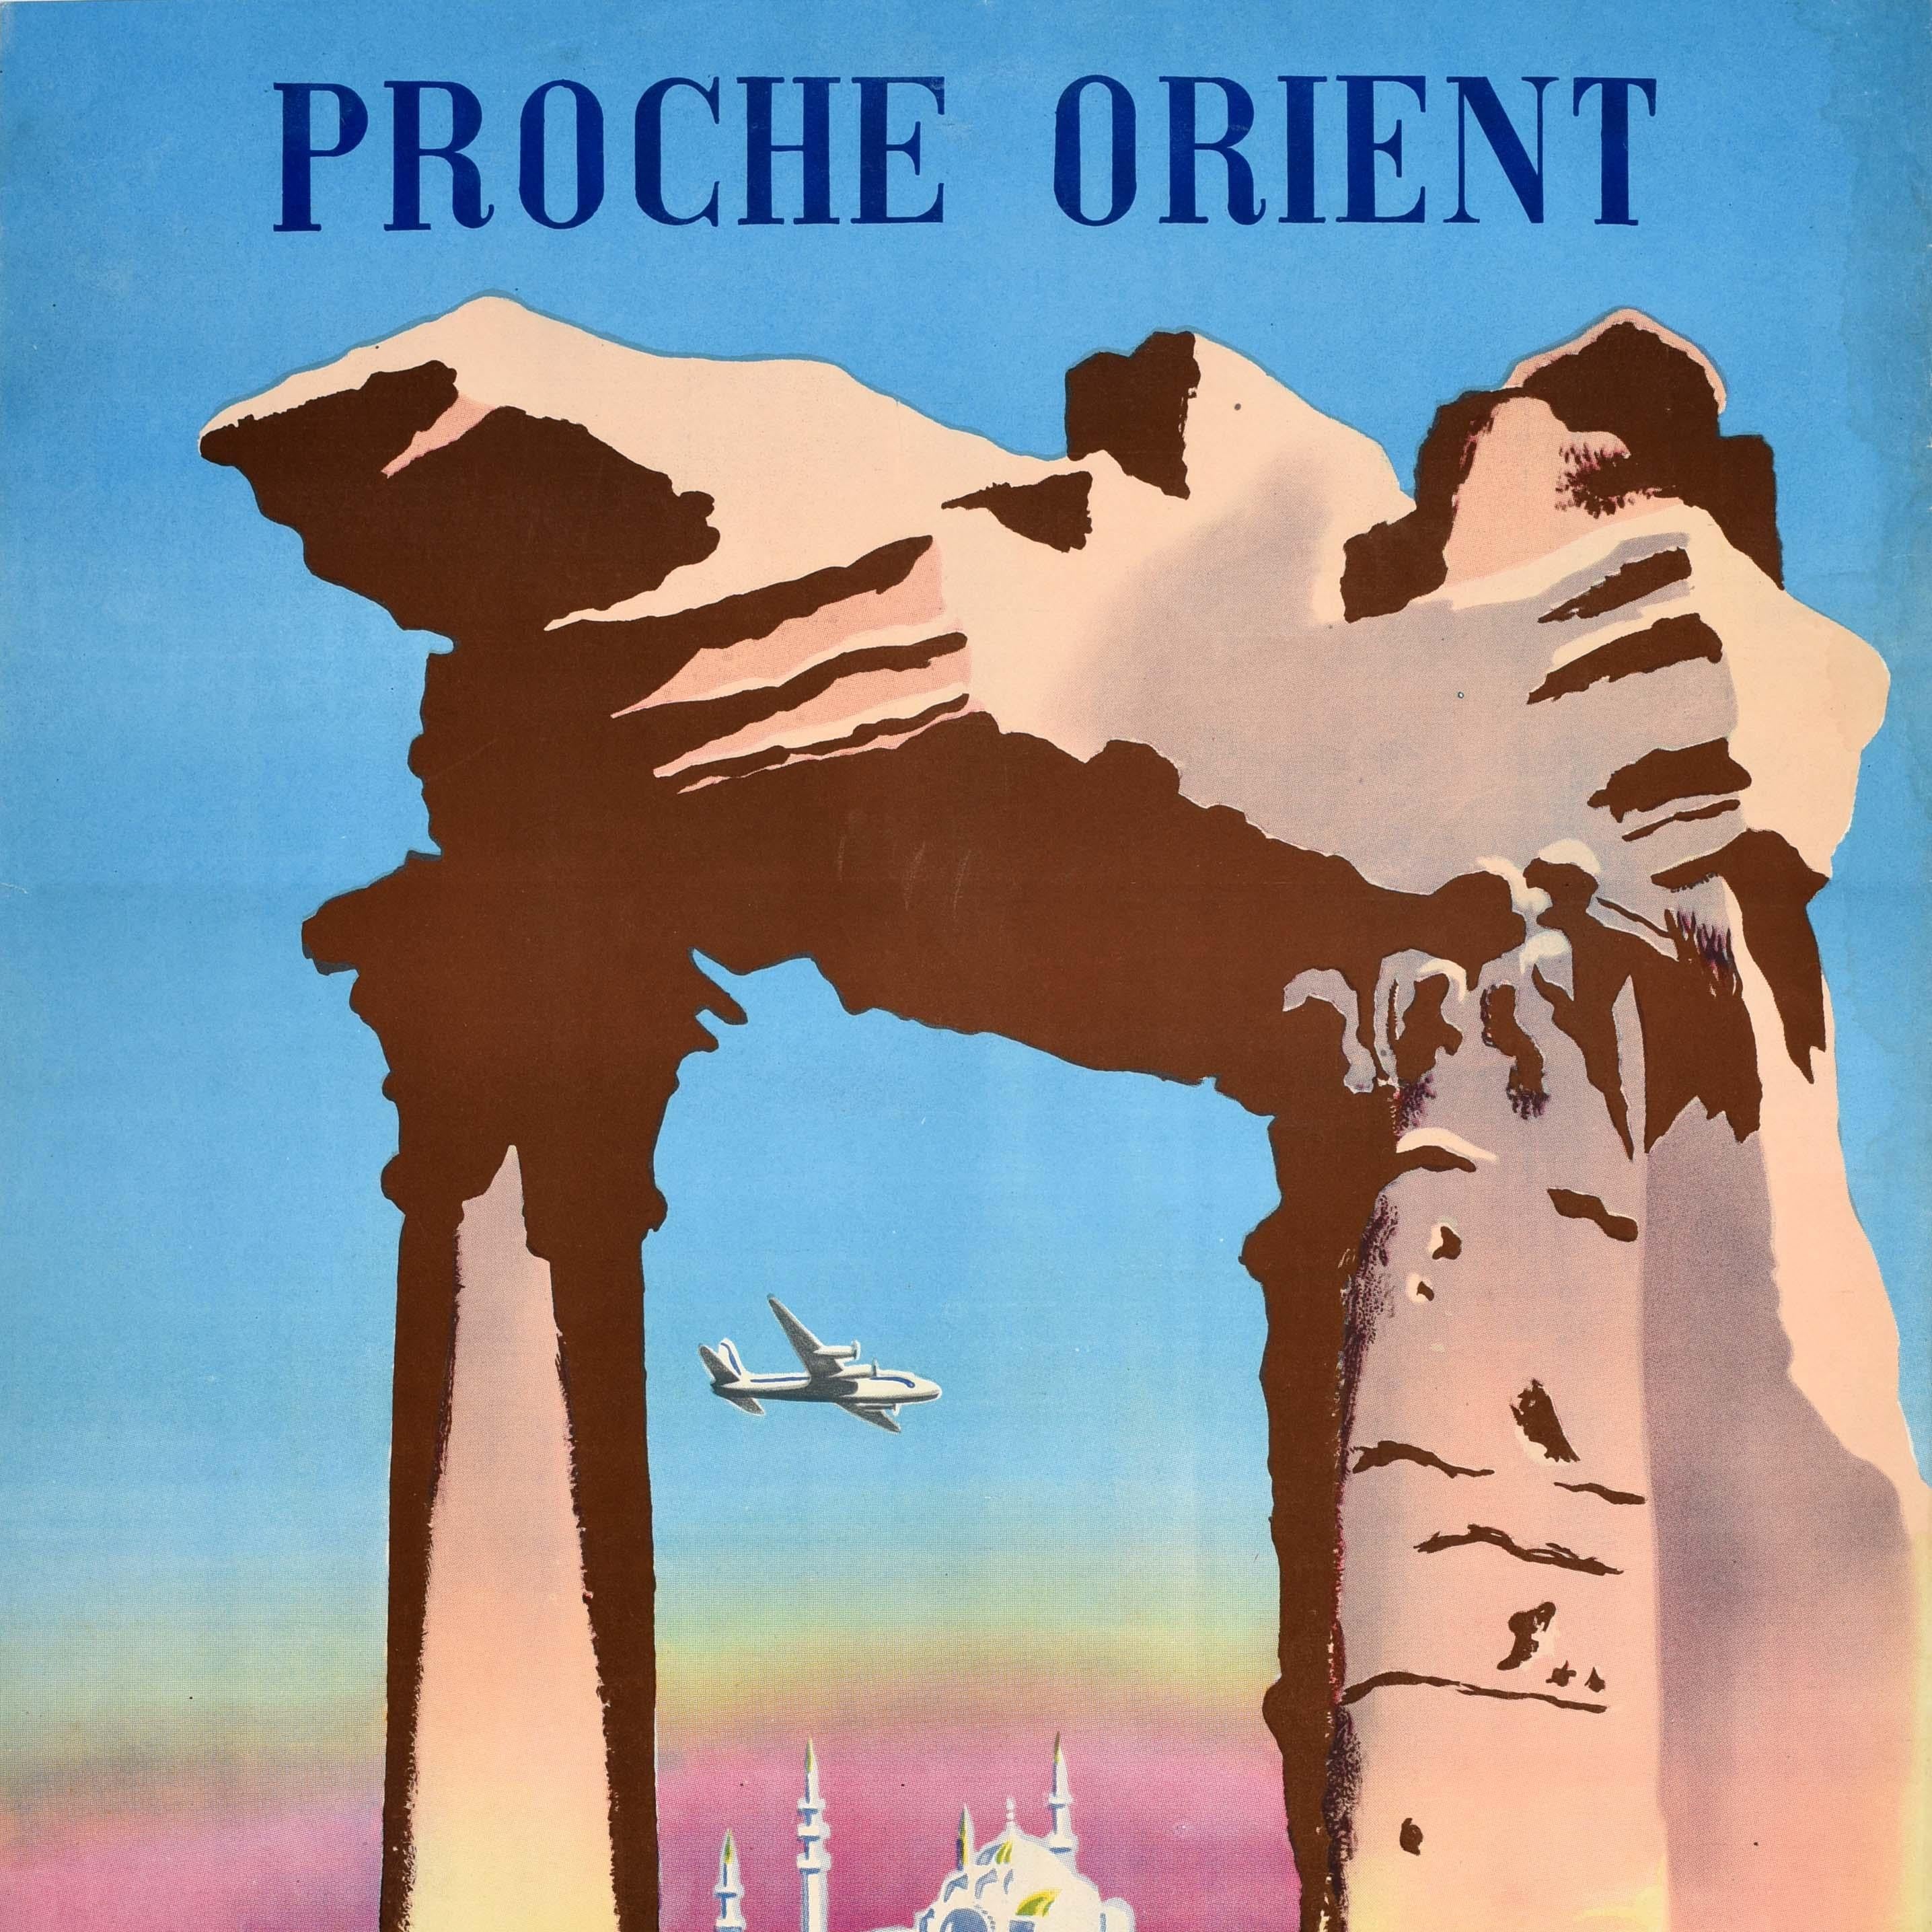 Original Vintage Travel Poster Air France Middle East Proche Orient Jean Even For Sale 1